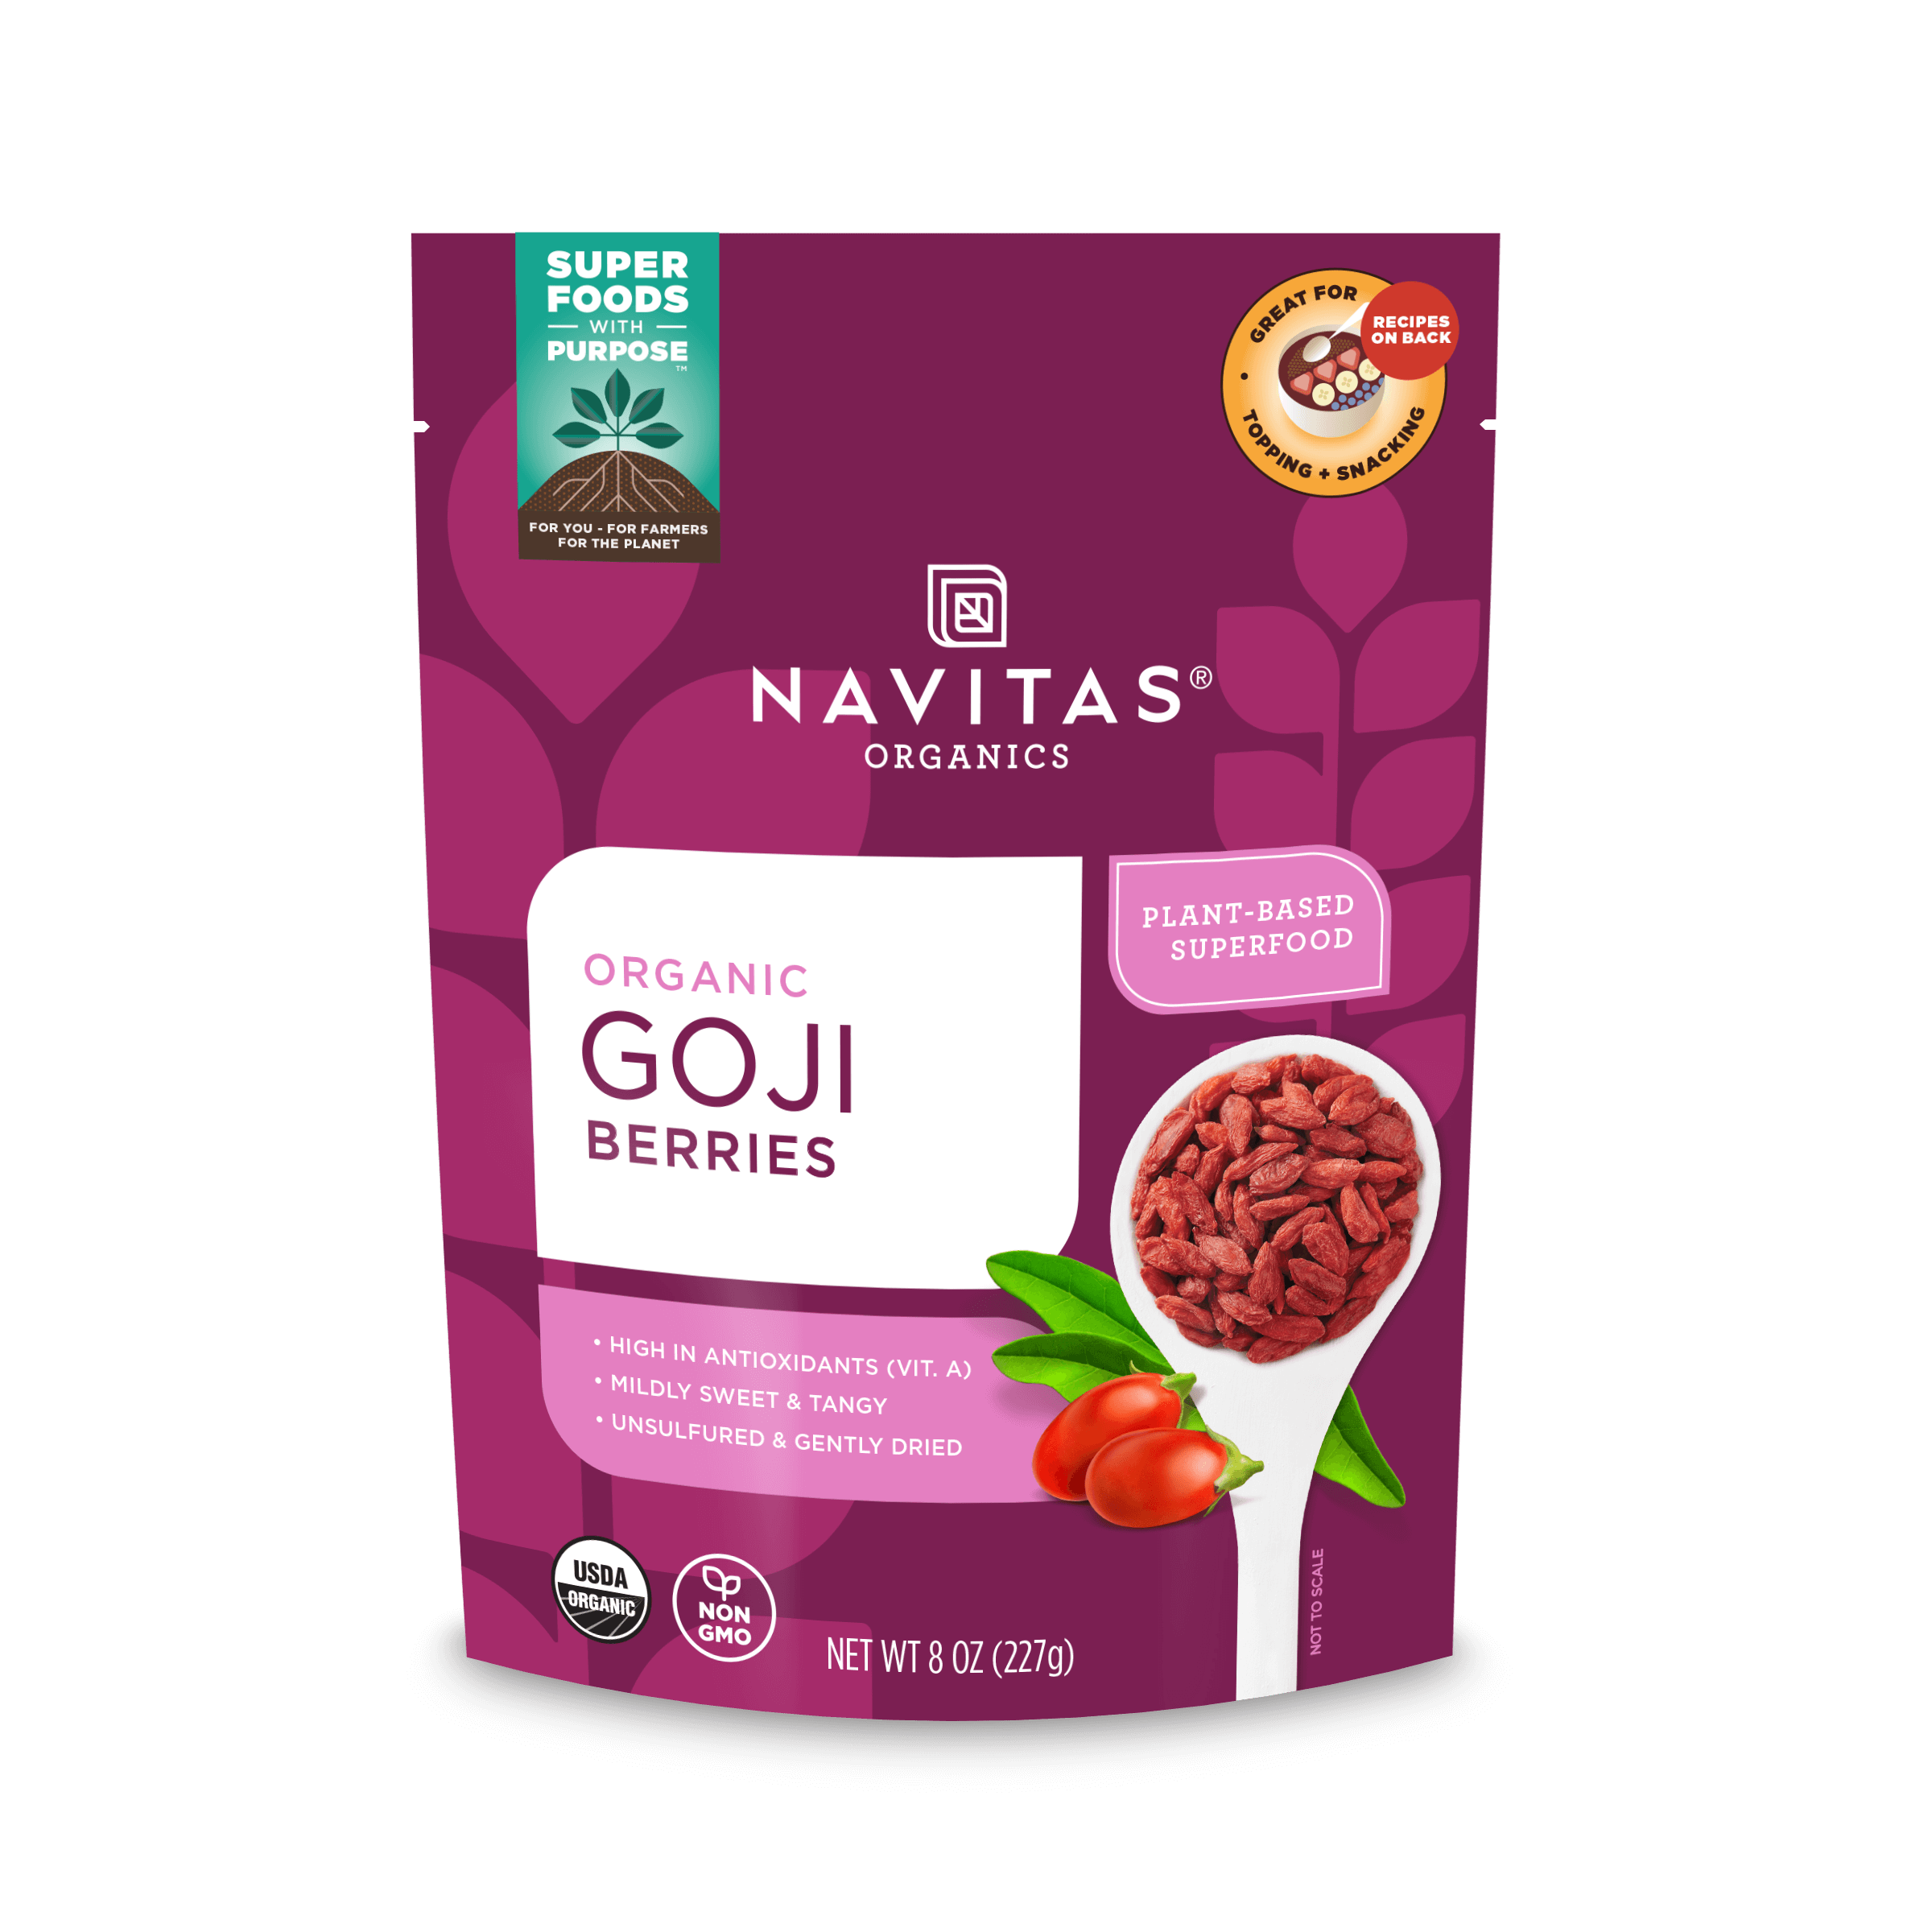 Navitas Organics Goji Berries 8 oz. front of package.